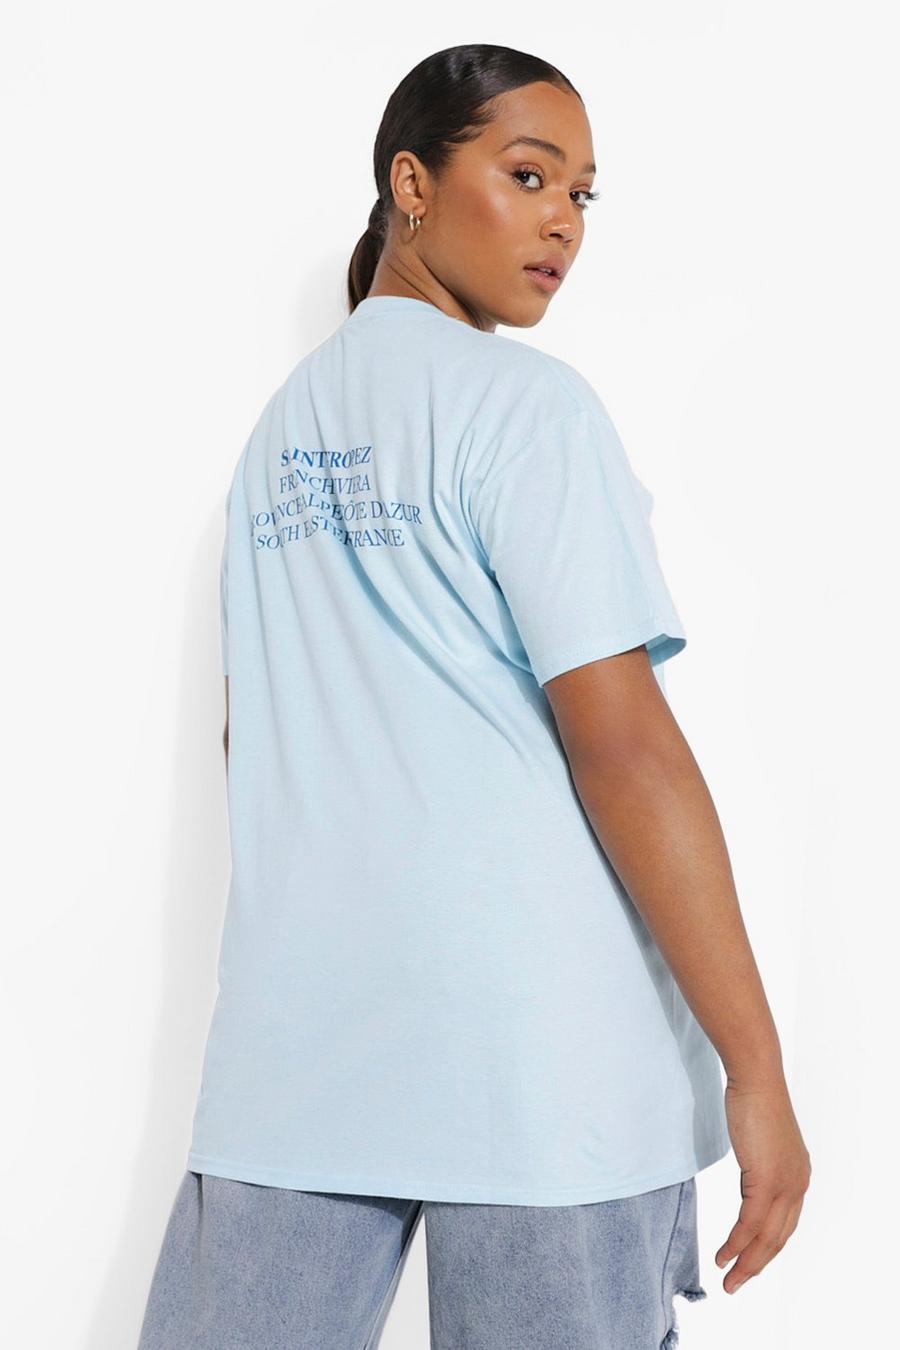 Camiseta con eslogan “Saint Tropez” Plus, Baby blue image number 1